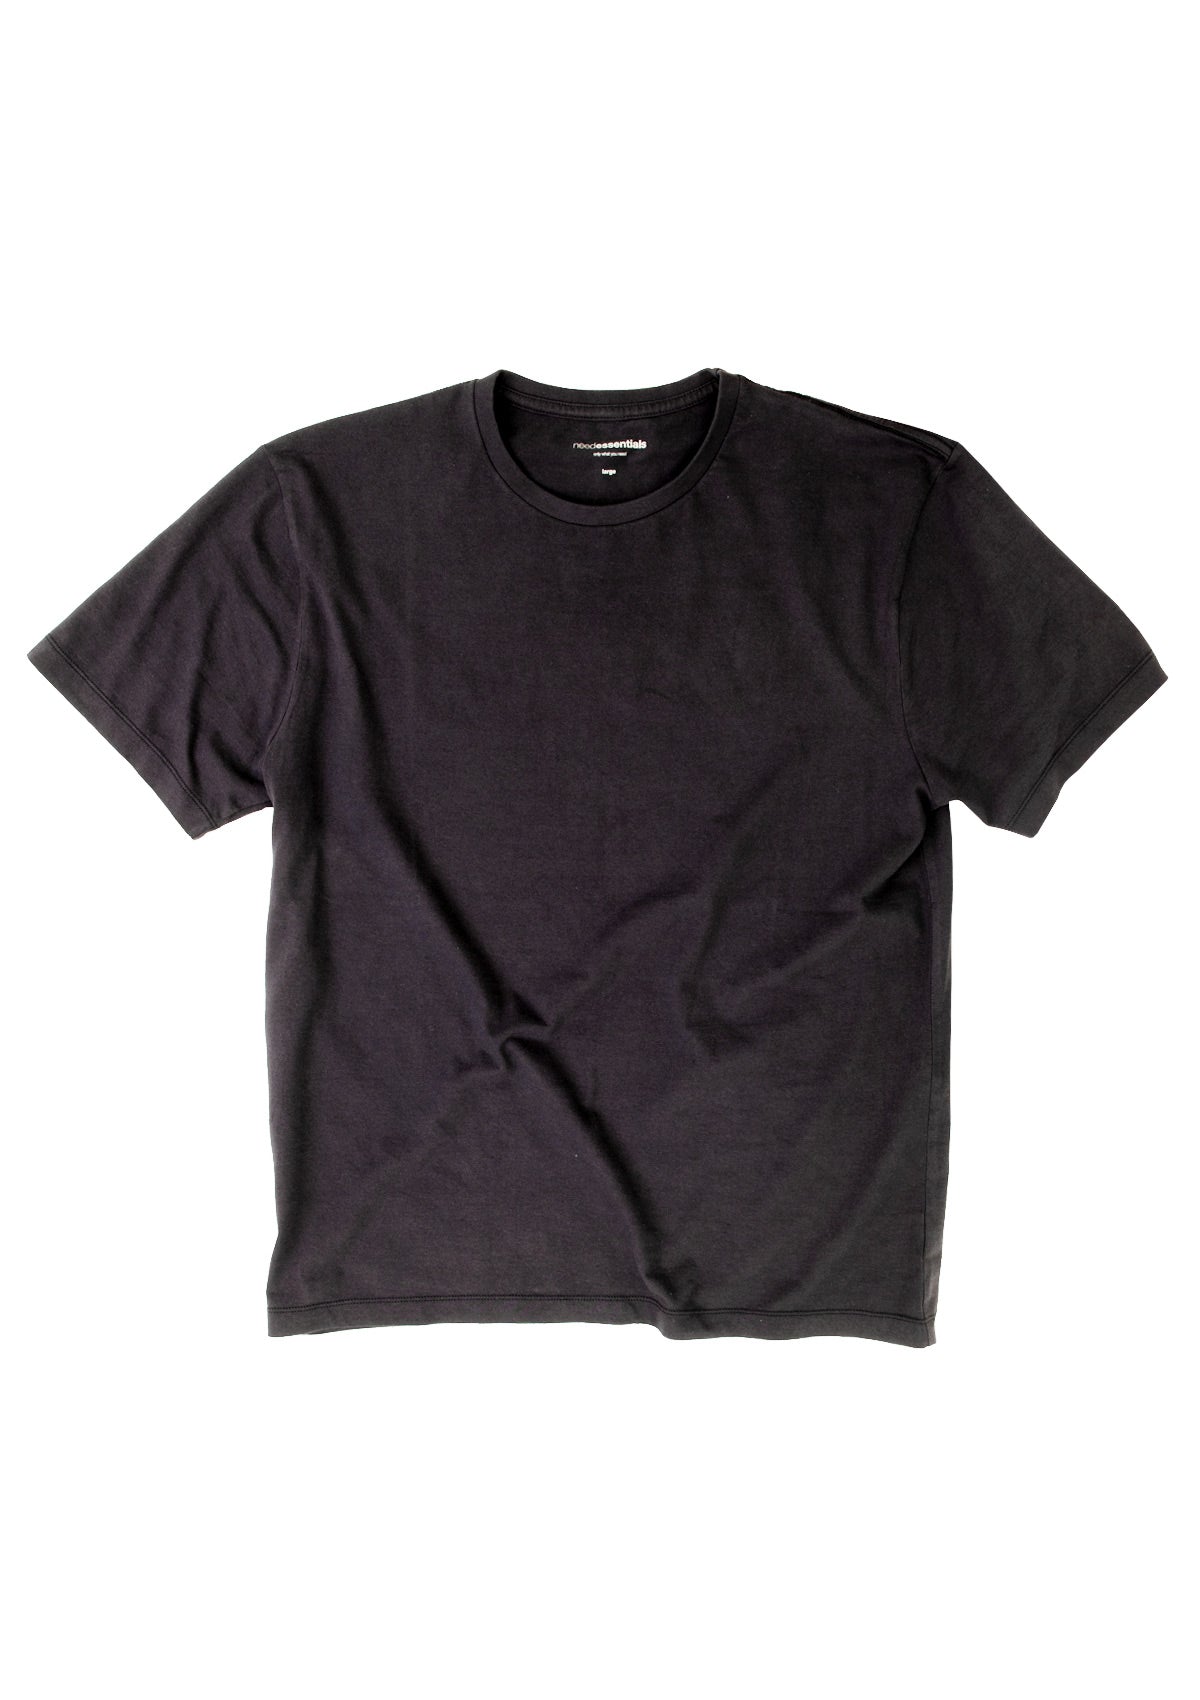 needessentials organic cotton t-shirt plain black